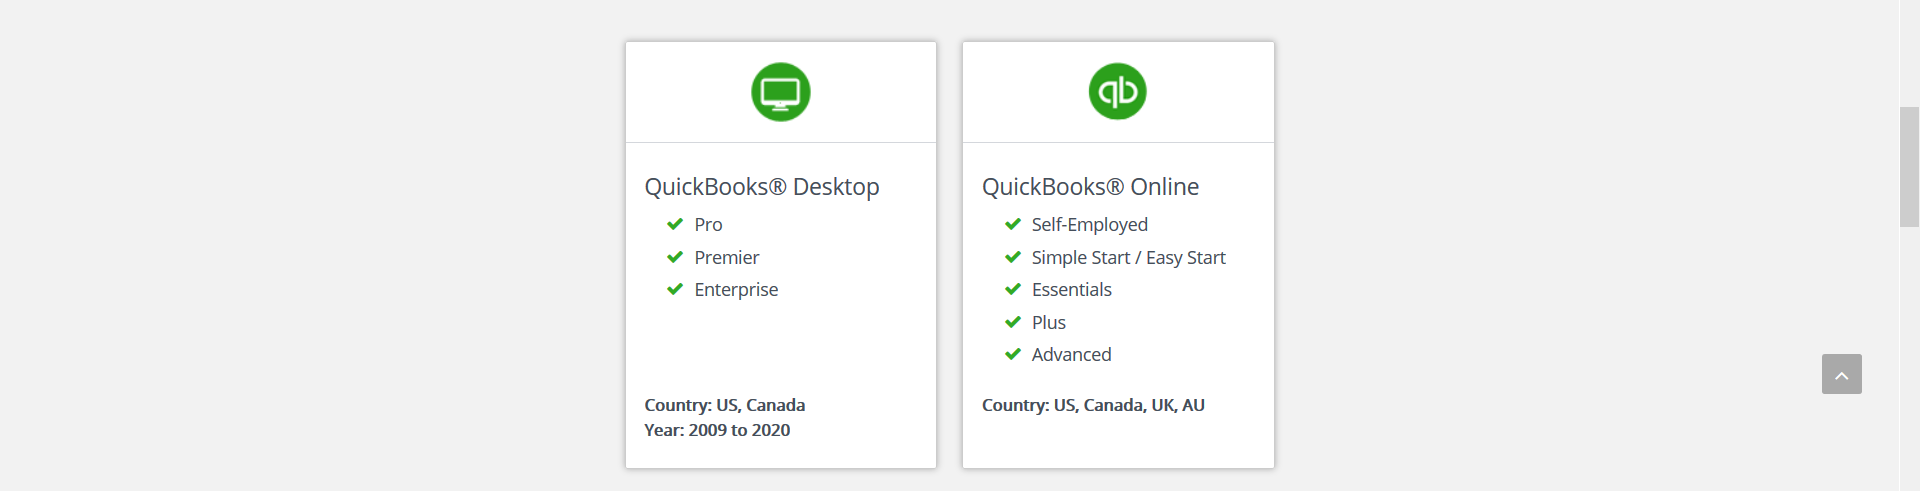 quickbooks upgrade from 2009 to 2016